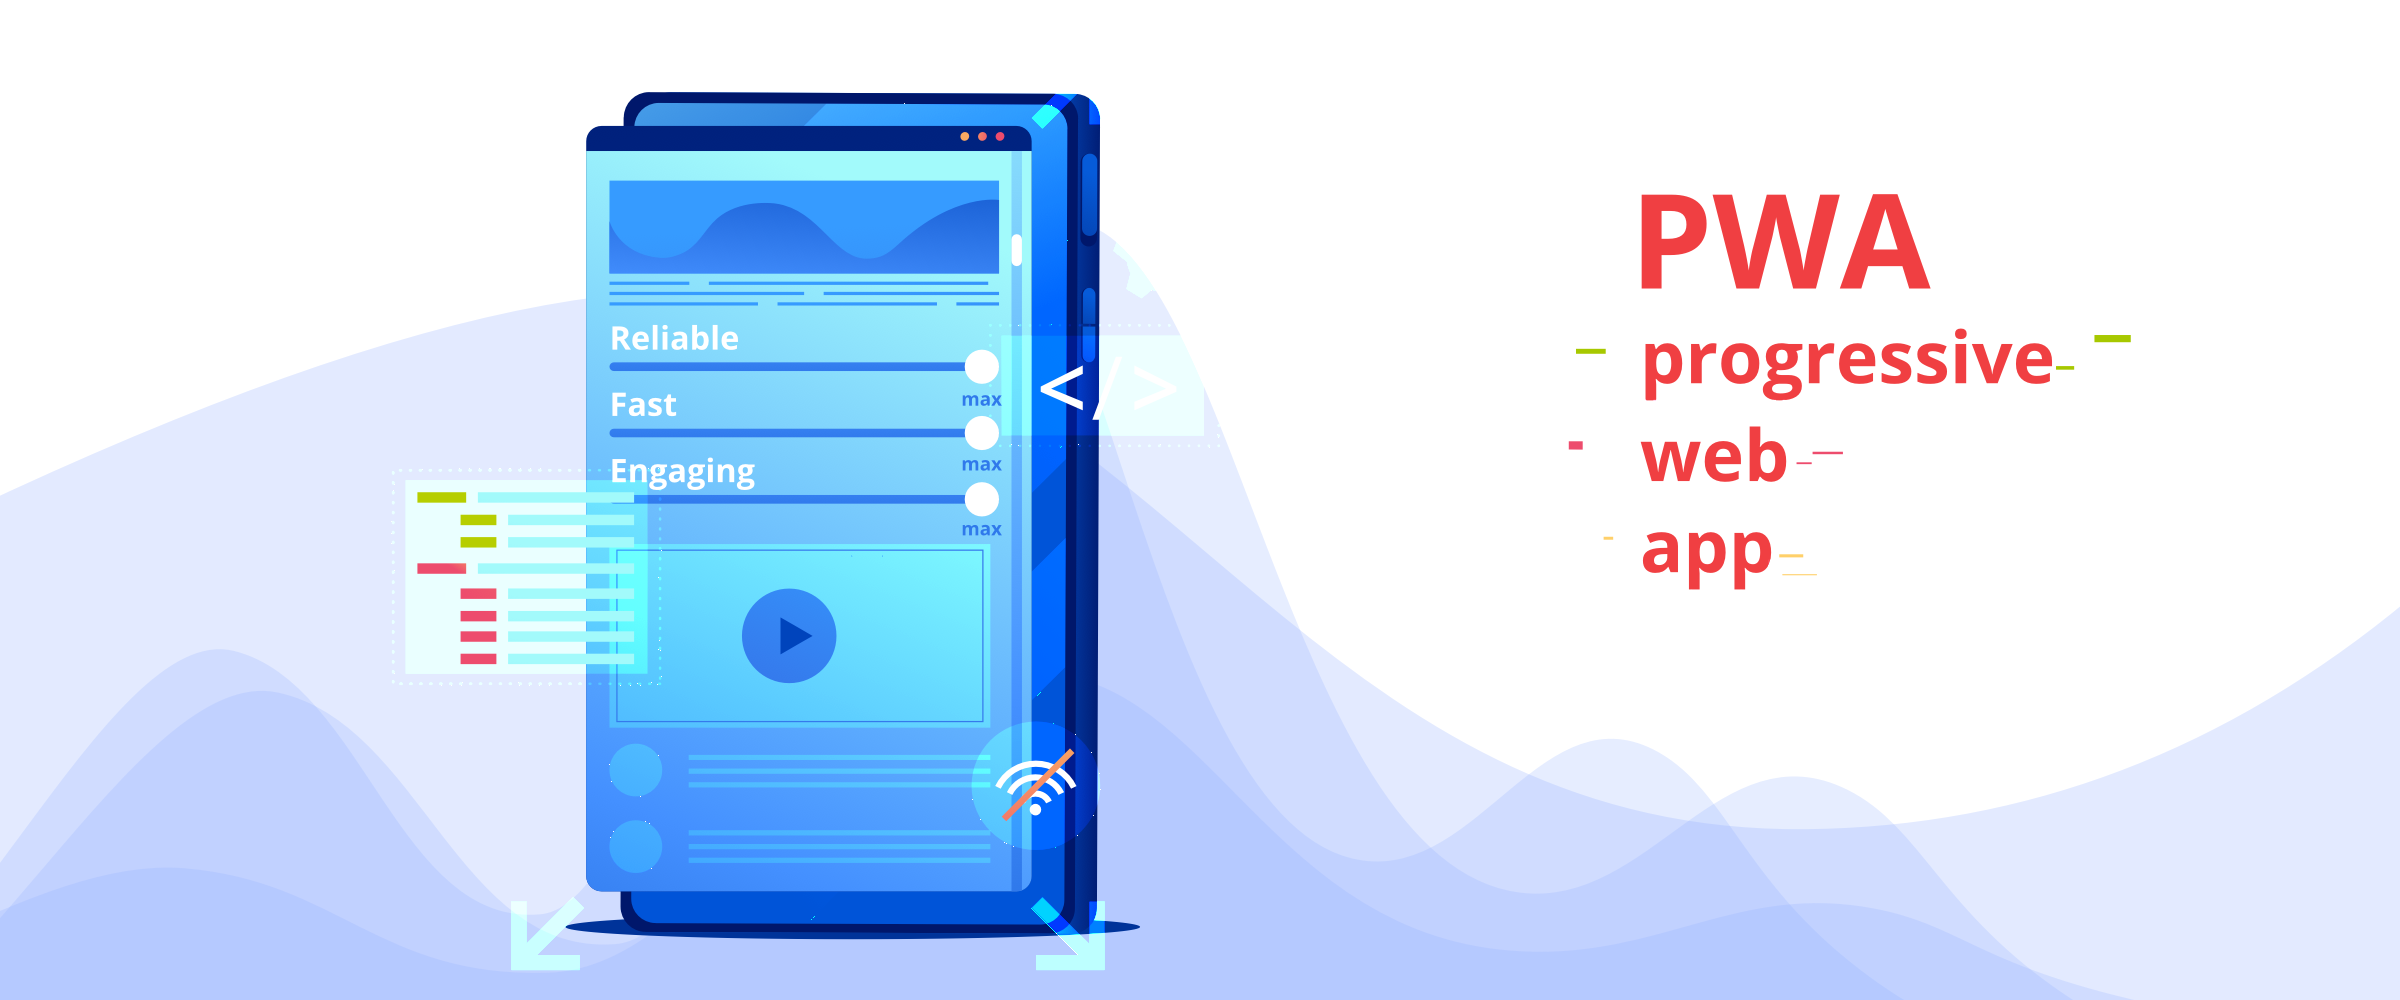 Benefits of Progressive Web App (PWA)